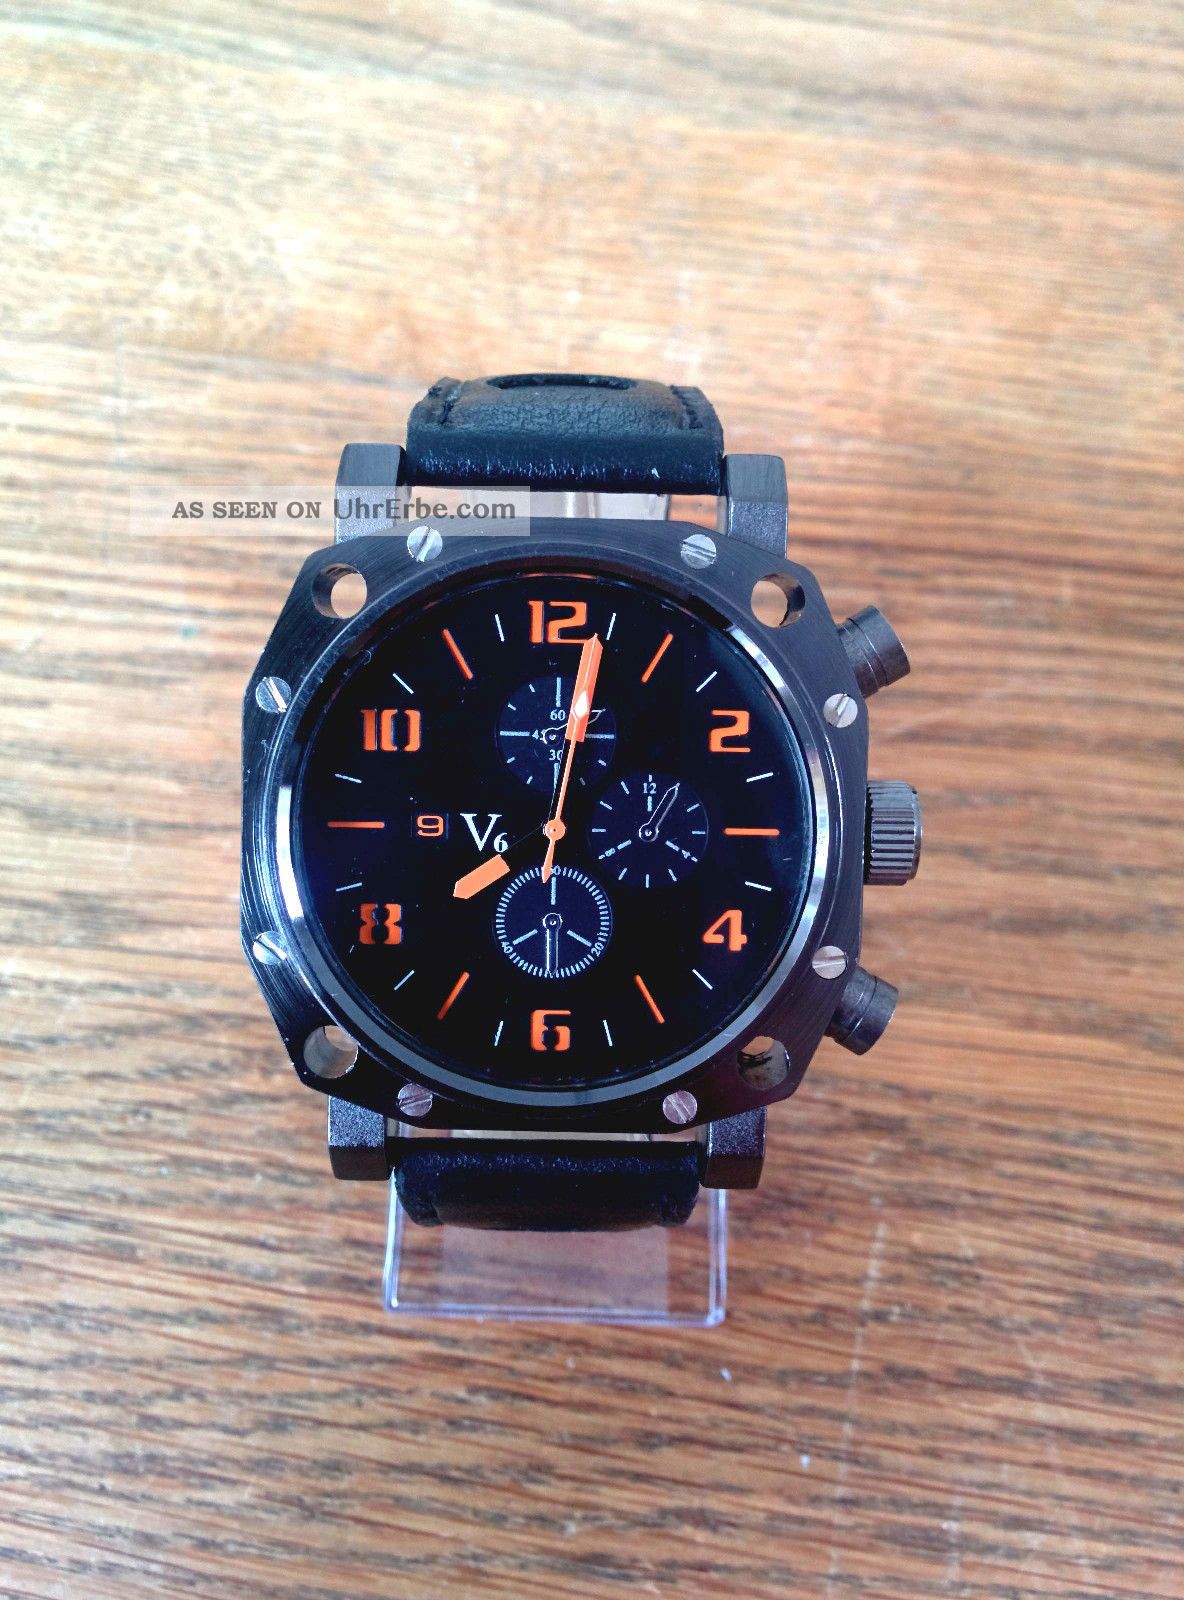 V6 Armbanduhr Herren Xl Sportuhr Militär Quarz Uhr Leder Orange Geschenk